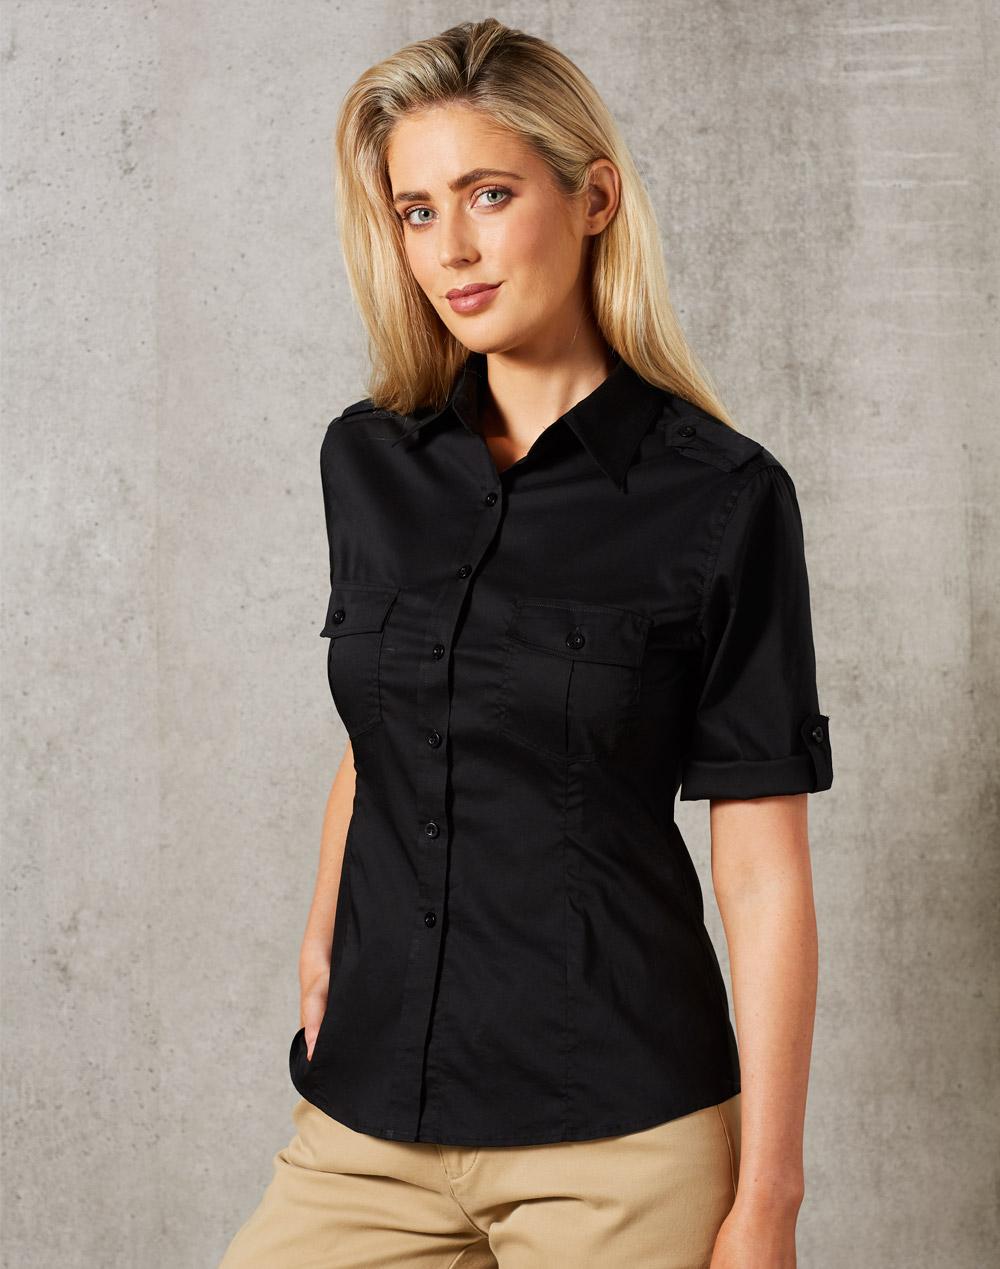 Benchmark M8911 Women's Short Sleeve Military Shirt